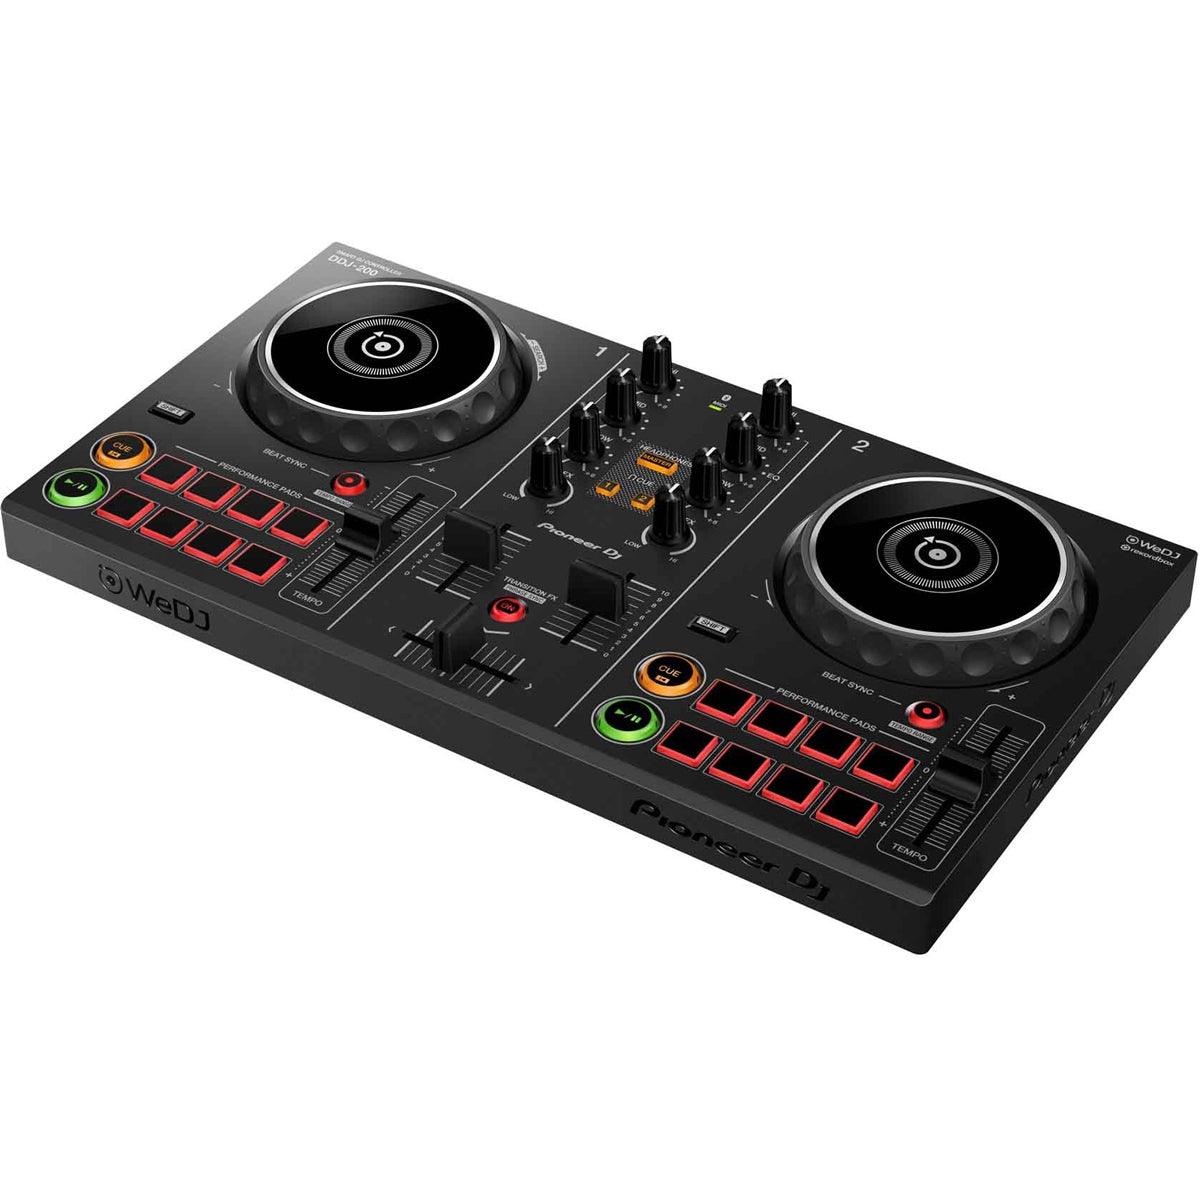 Pioneer DDJ-200 DJ Controller - DY Pro Audio